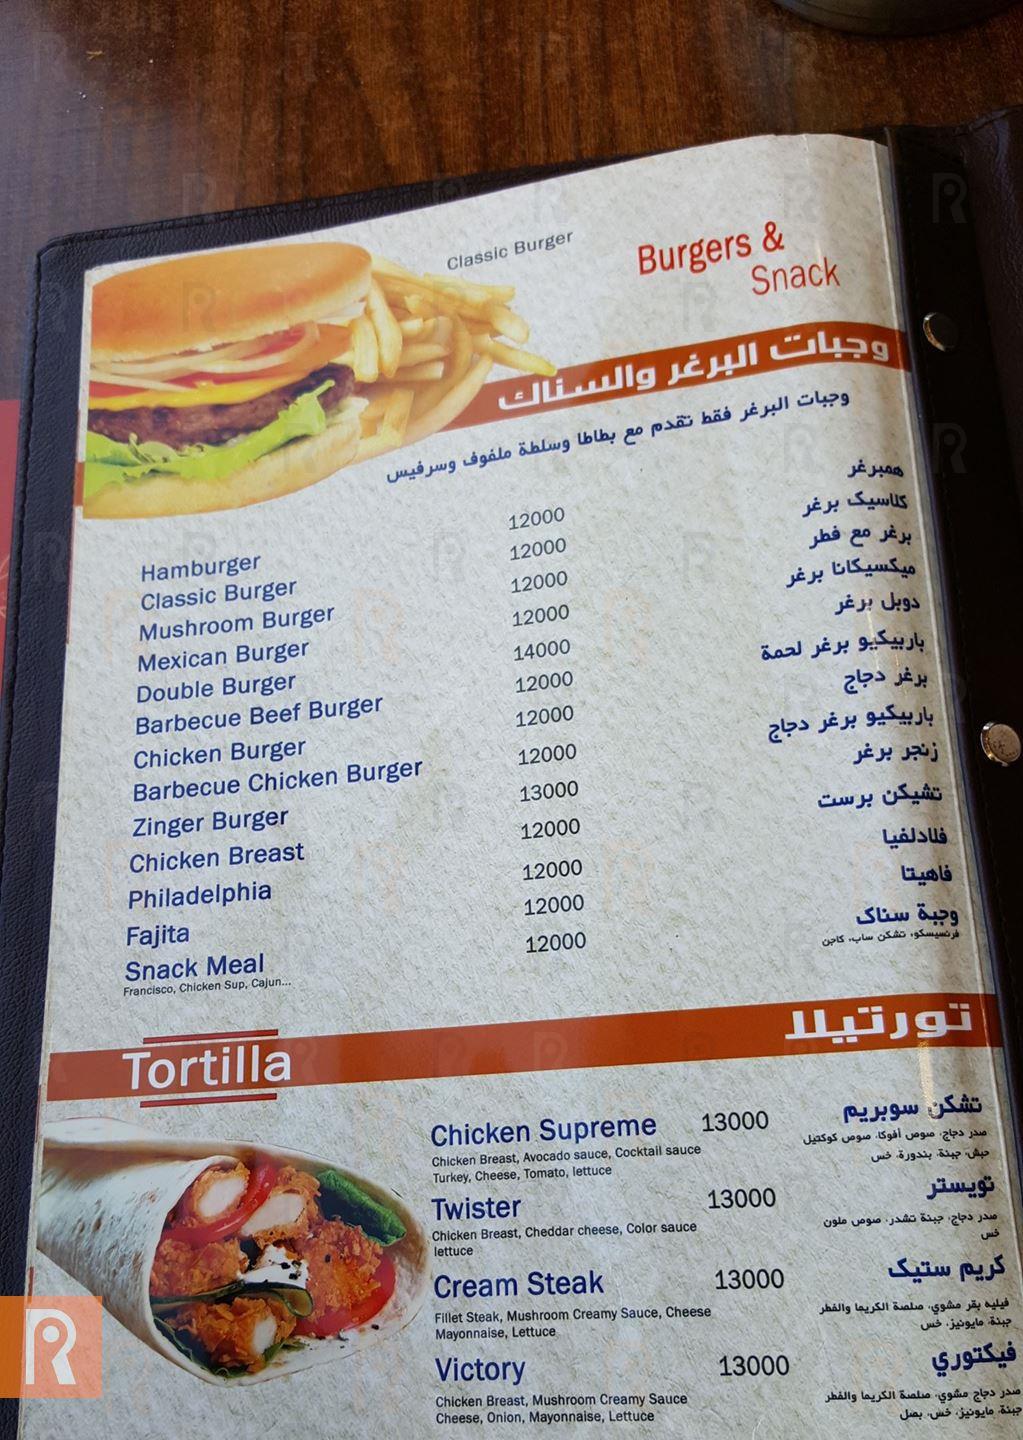 Al Jawad Restaurant Menu and Meals Prices